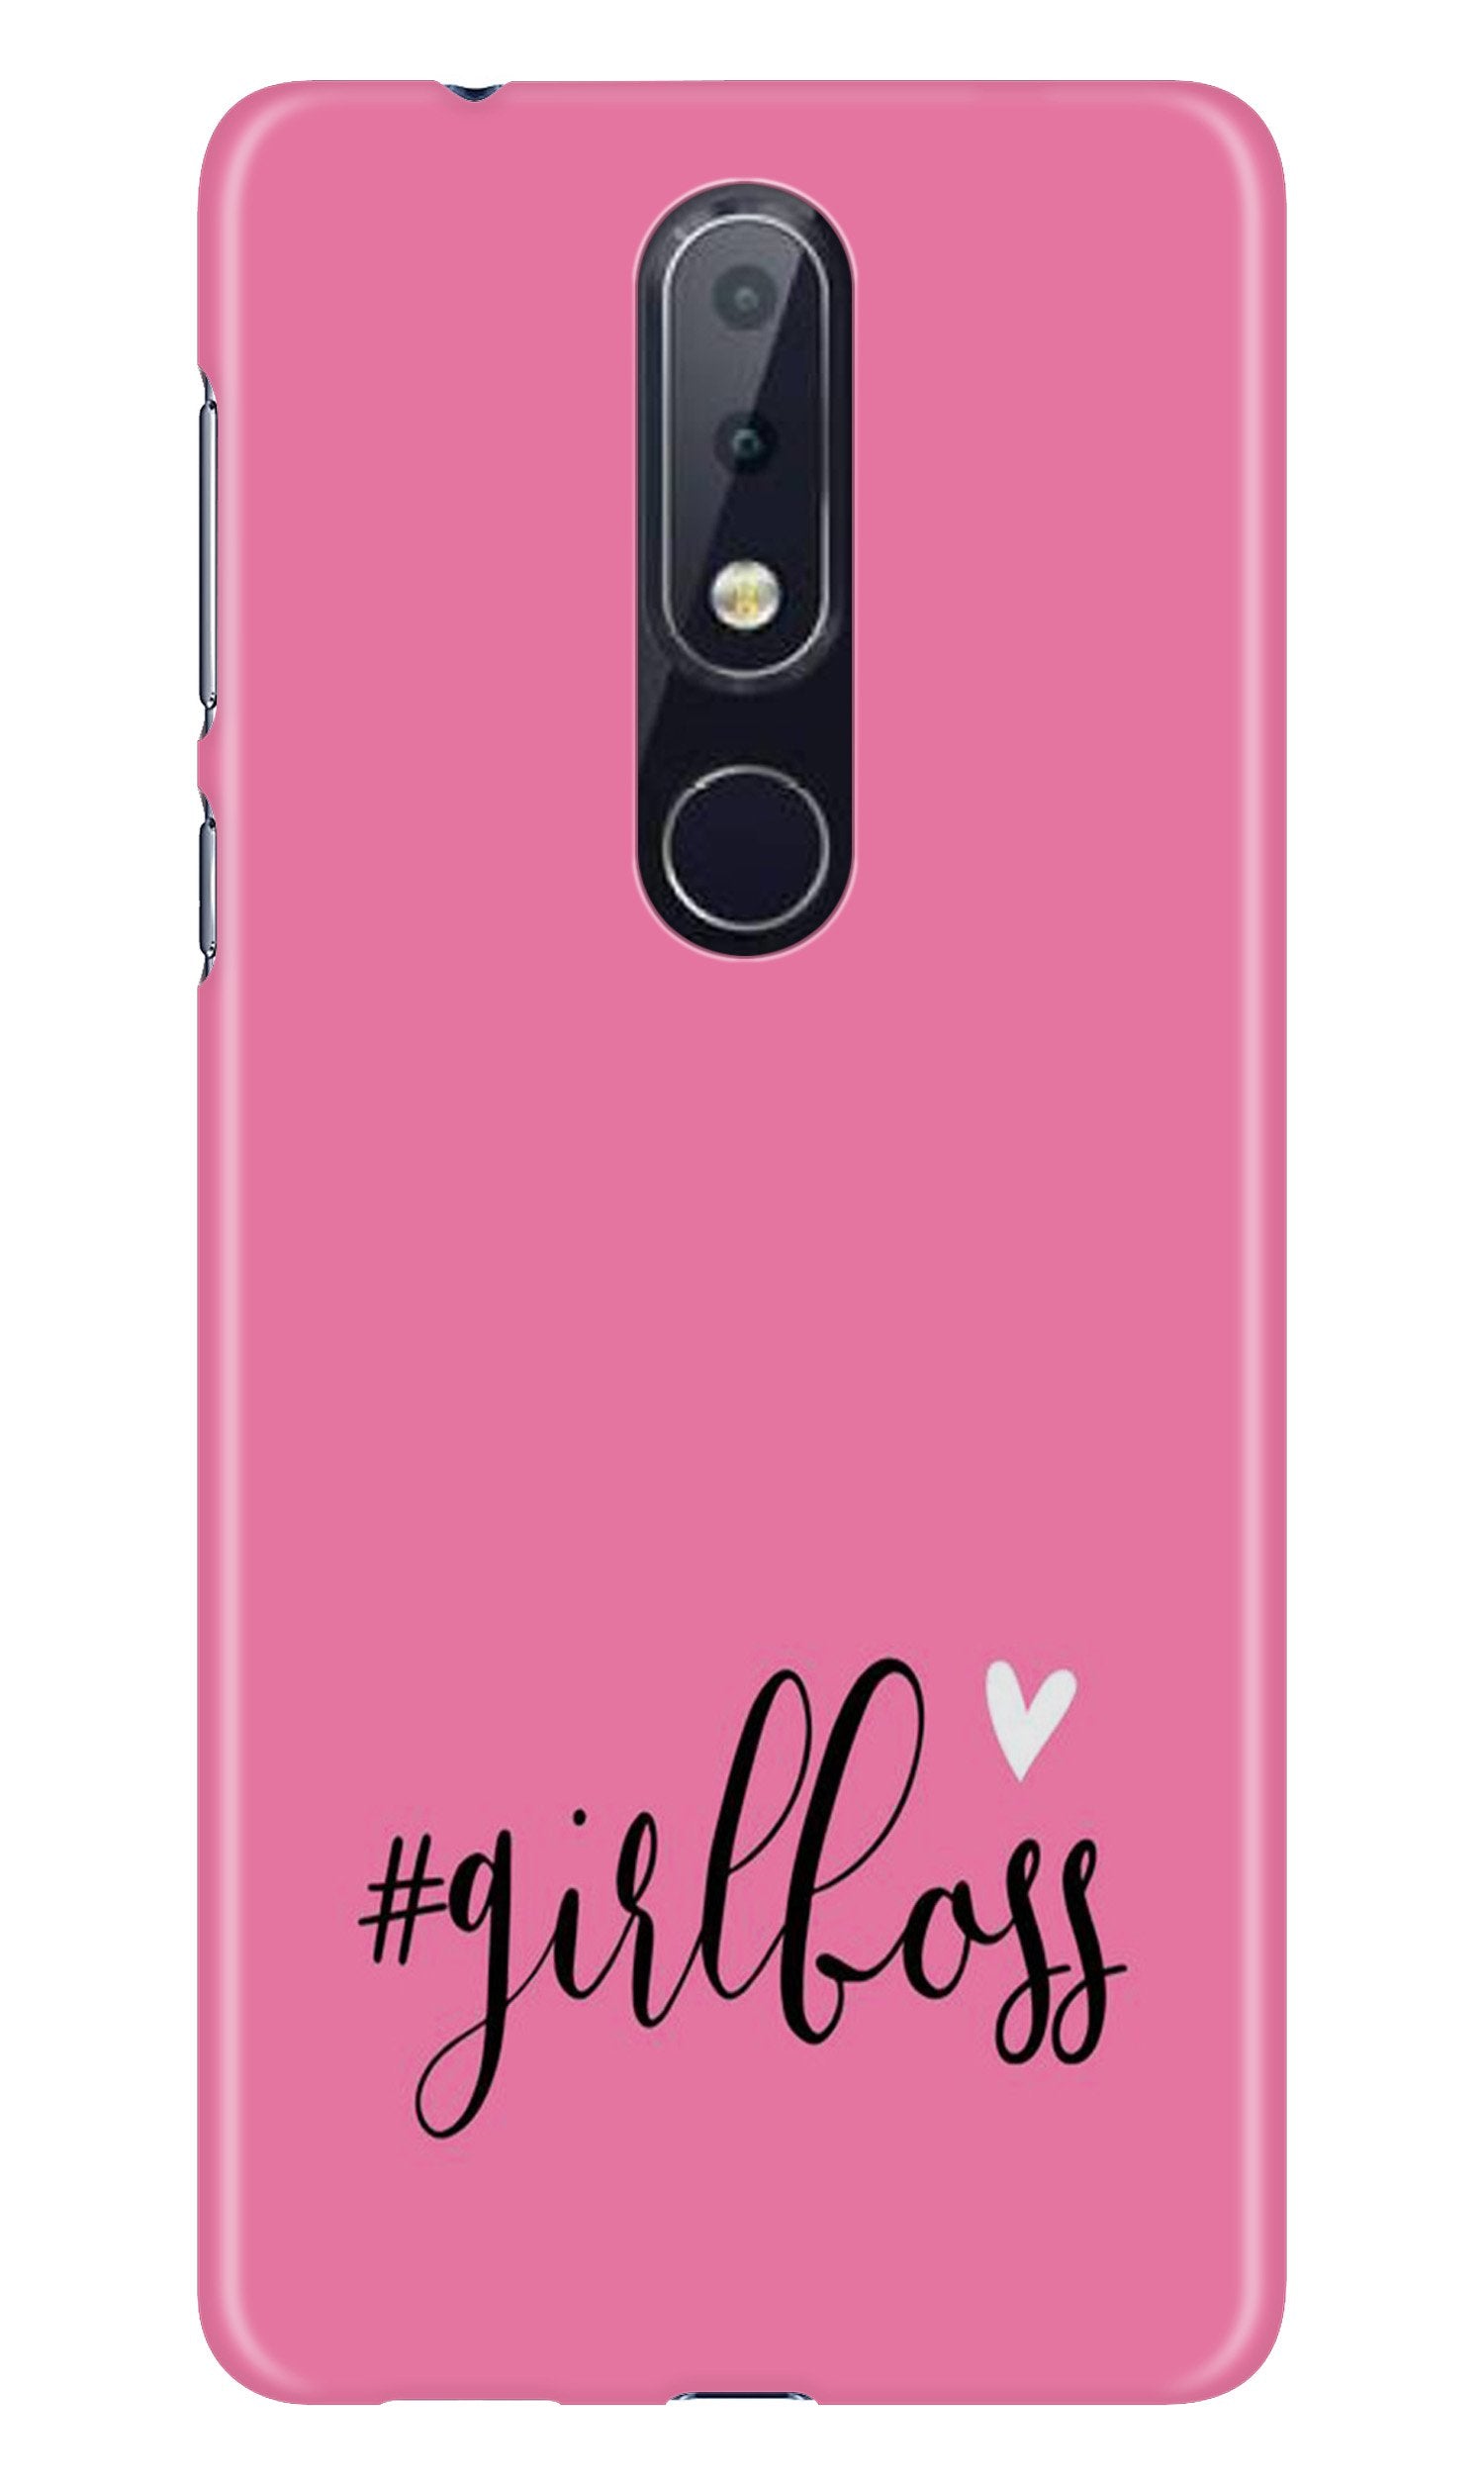 Girl Boss Pink Case for Nokia 4.2 (Design No. 269)